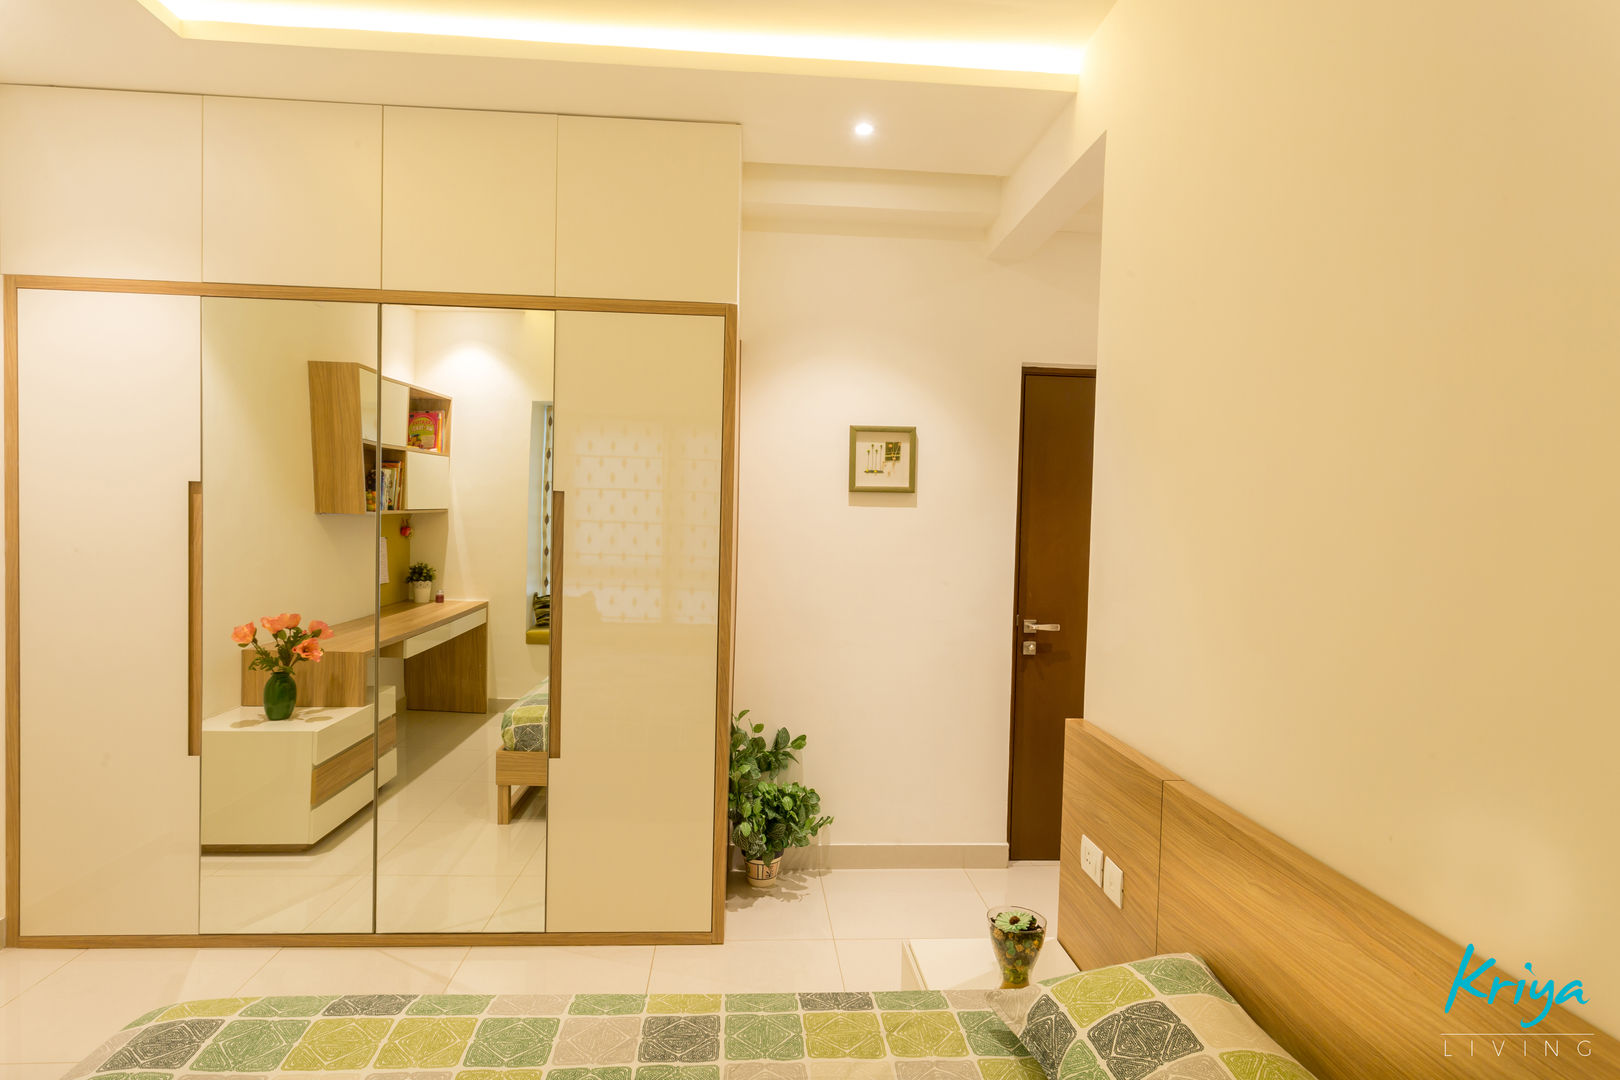 3 BHK apartment - RMZ Galleria, Bengaluru, KRIYA LIVING KRIYA LIVING Dormitorios de estilo moderno